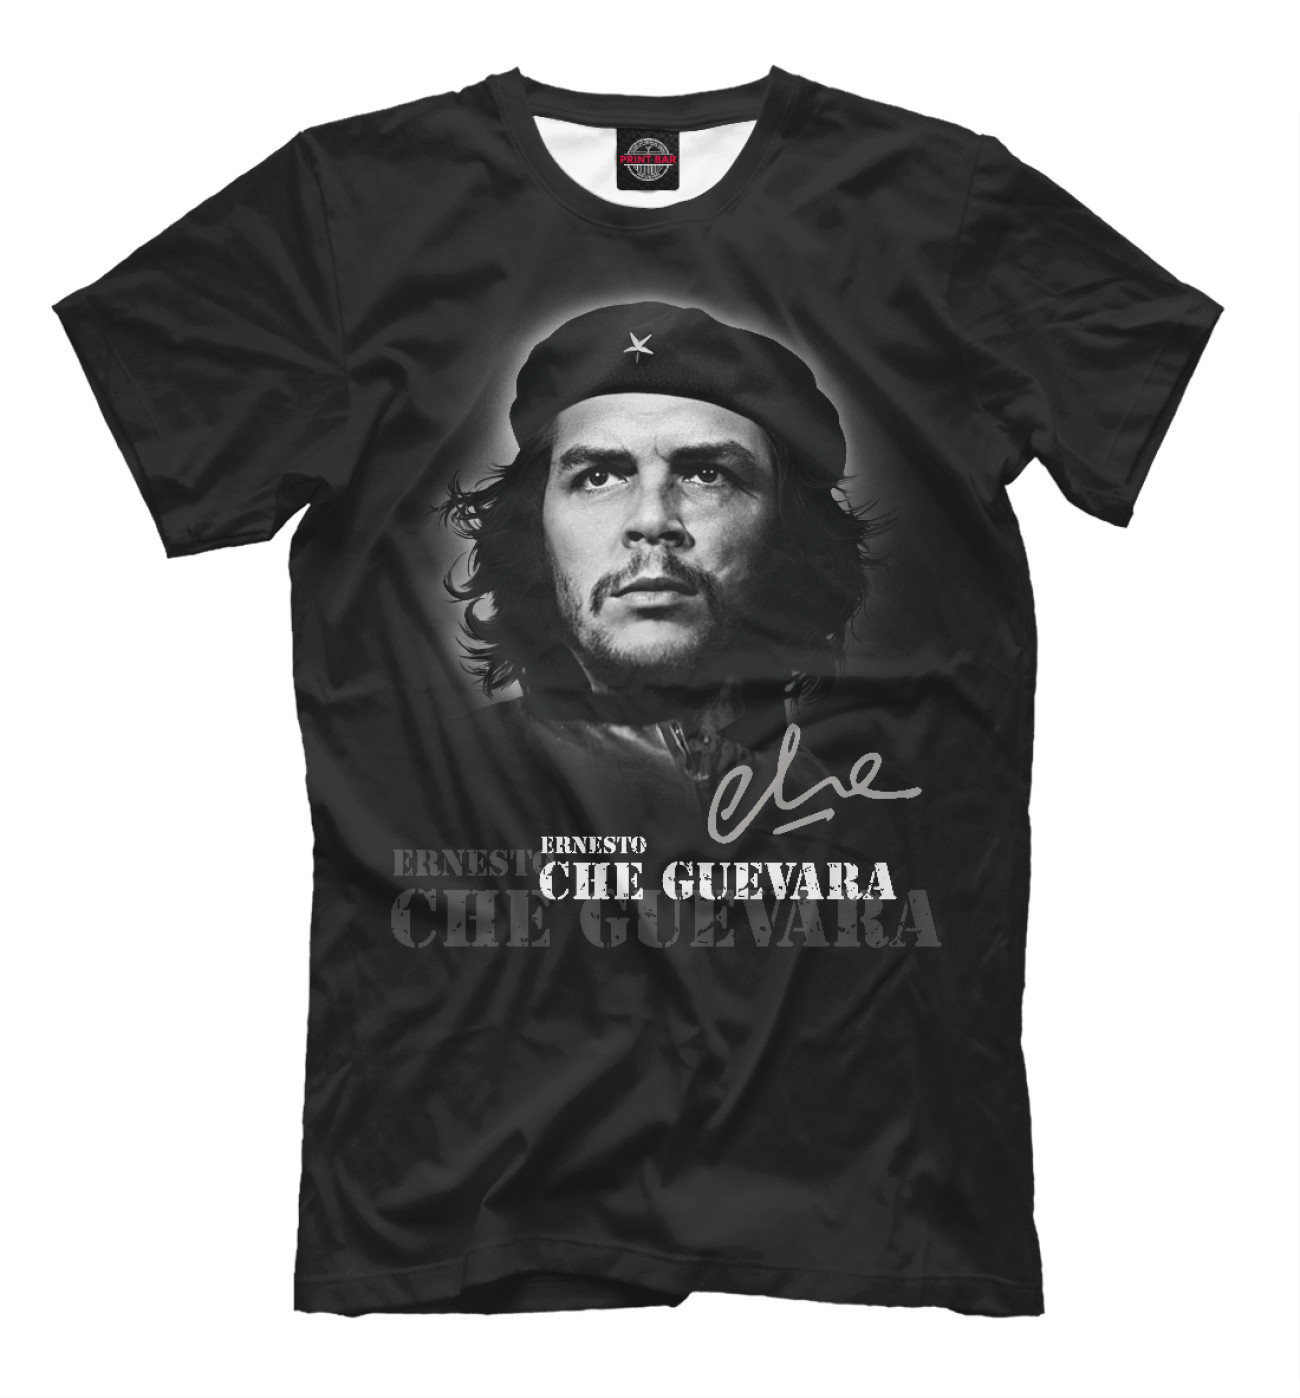 Мужская Футболка Che Guevara, артикул: APD-745388-fut-2